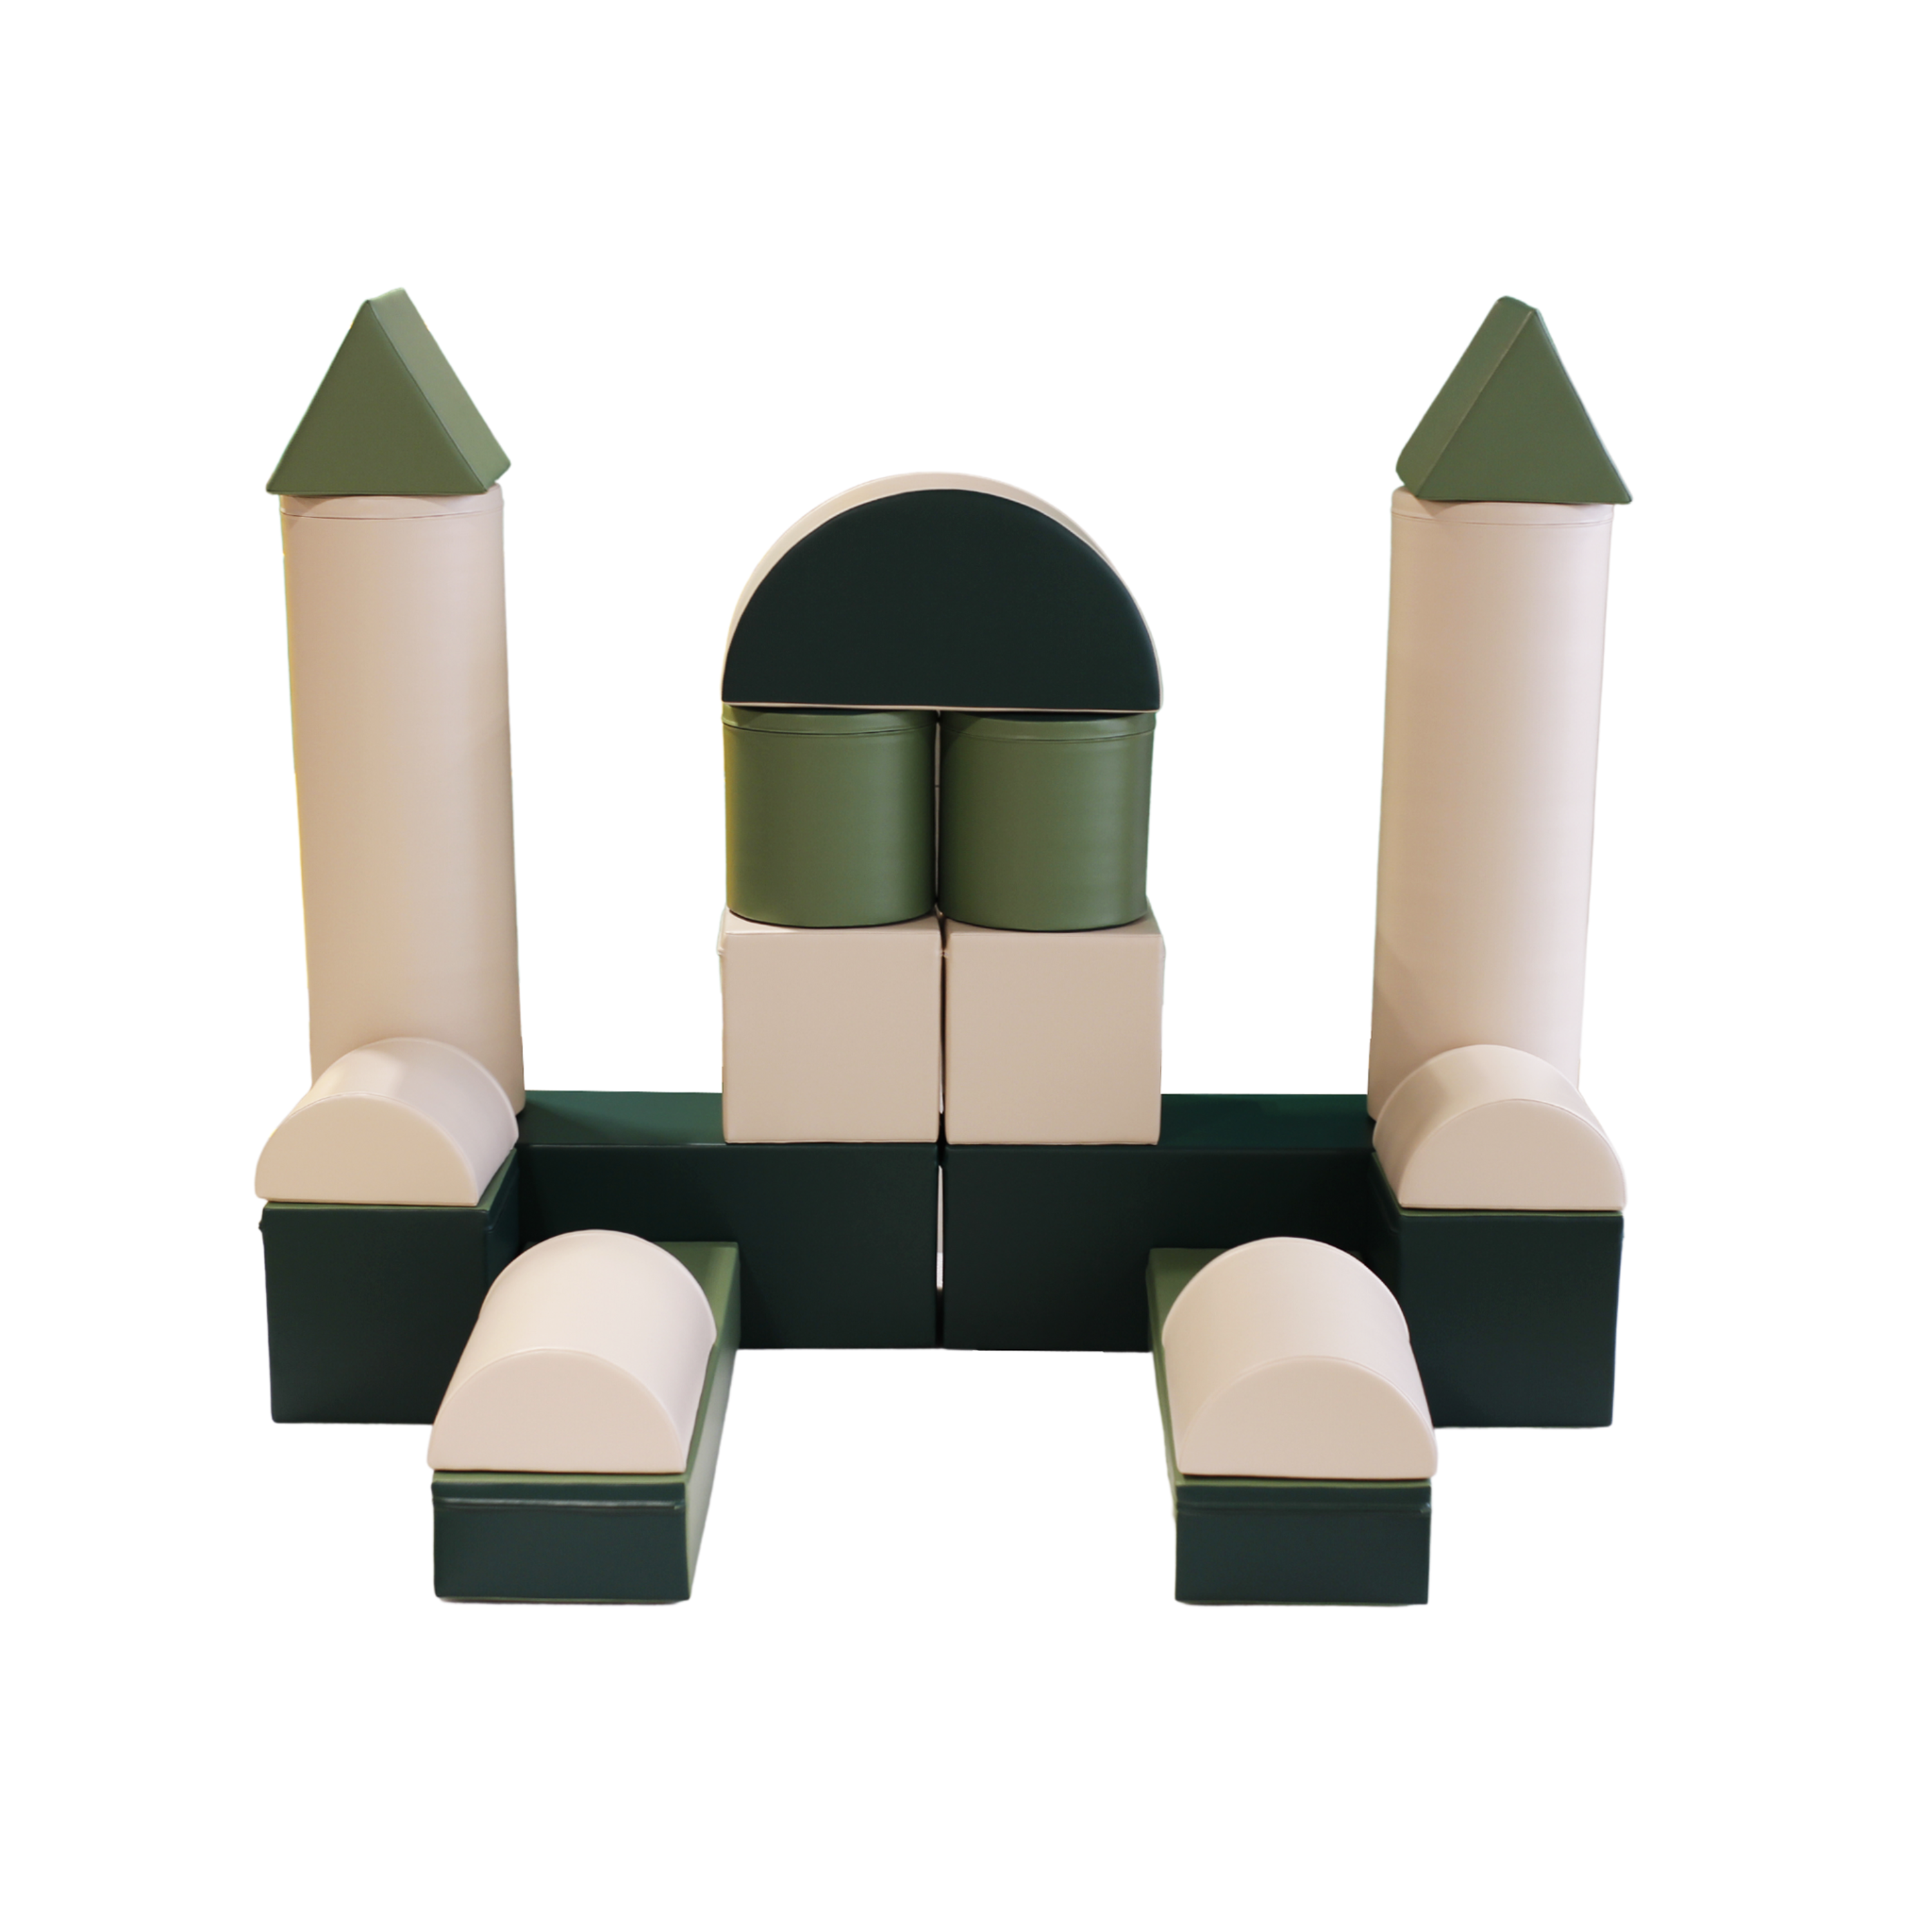 Green and cream colored custom IGLU castle